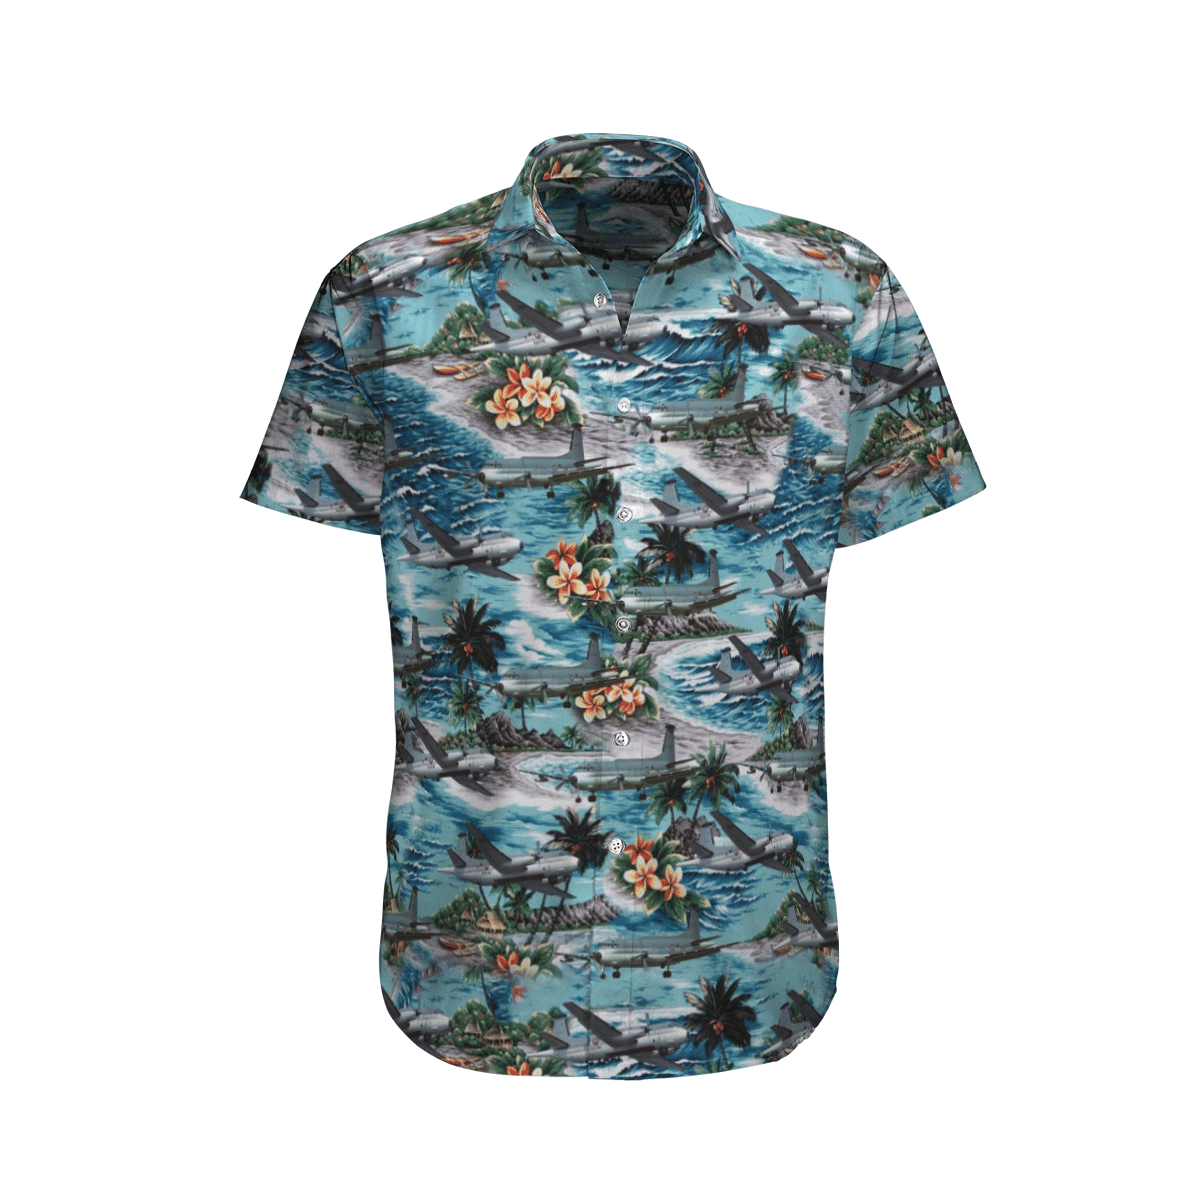 Get a new Hawaiian shirt to enjoy summer vacation 32